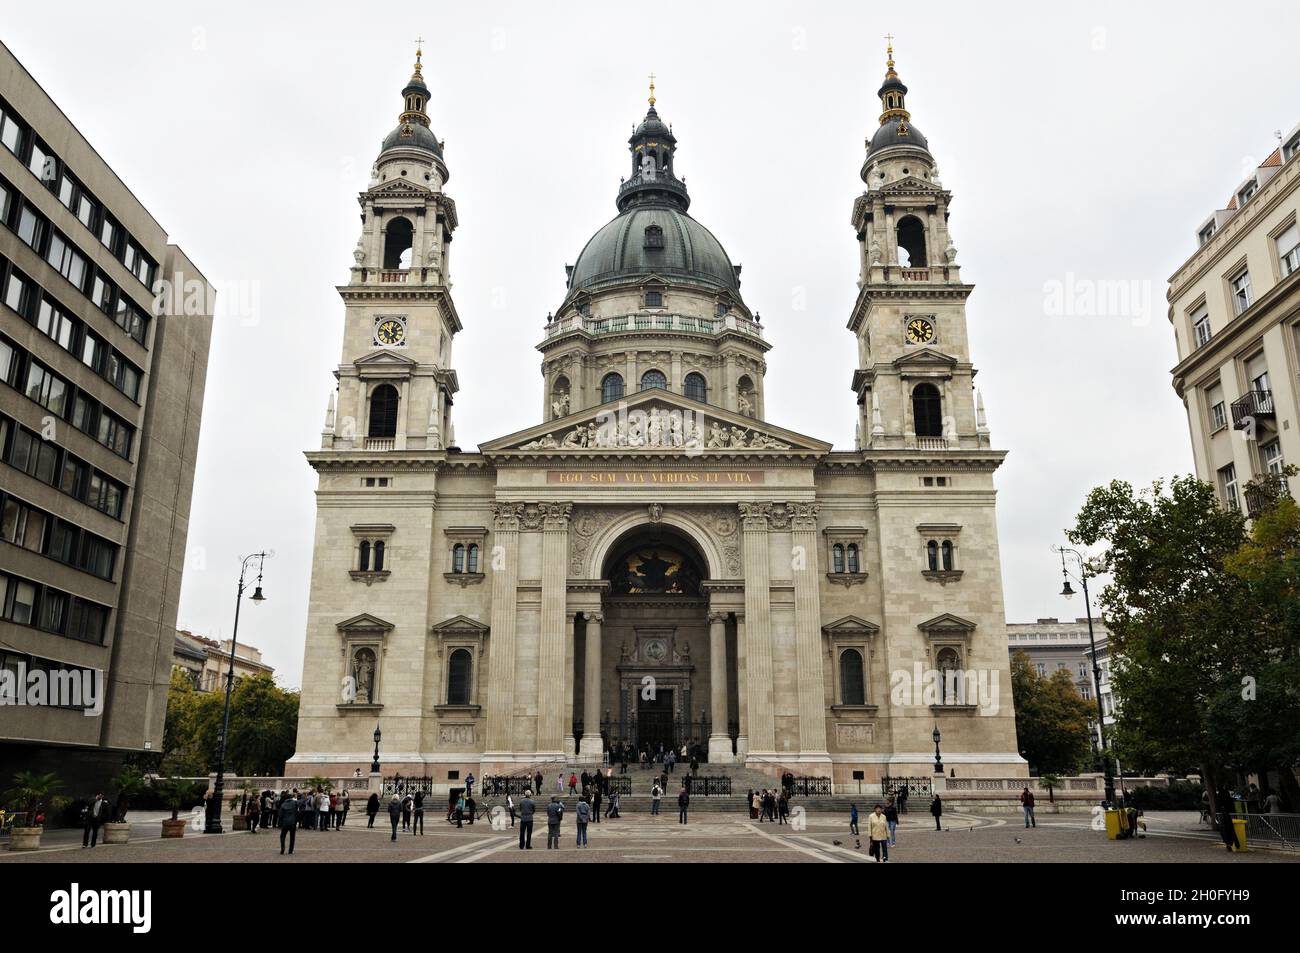 St Stephen's Basilica in Budapest, Hungary Stock Photo